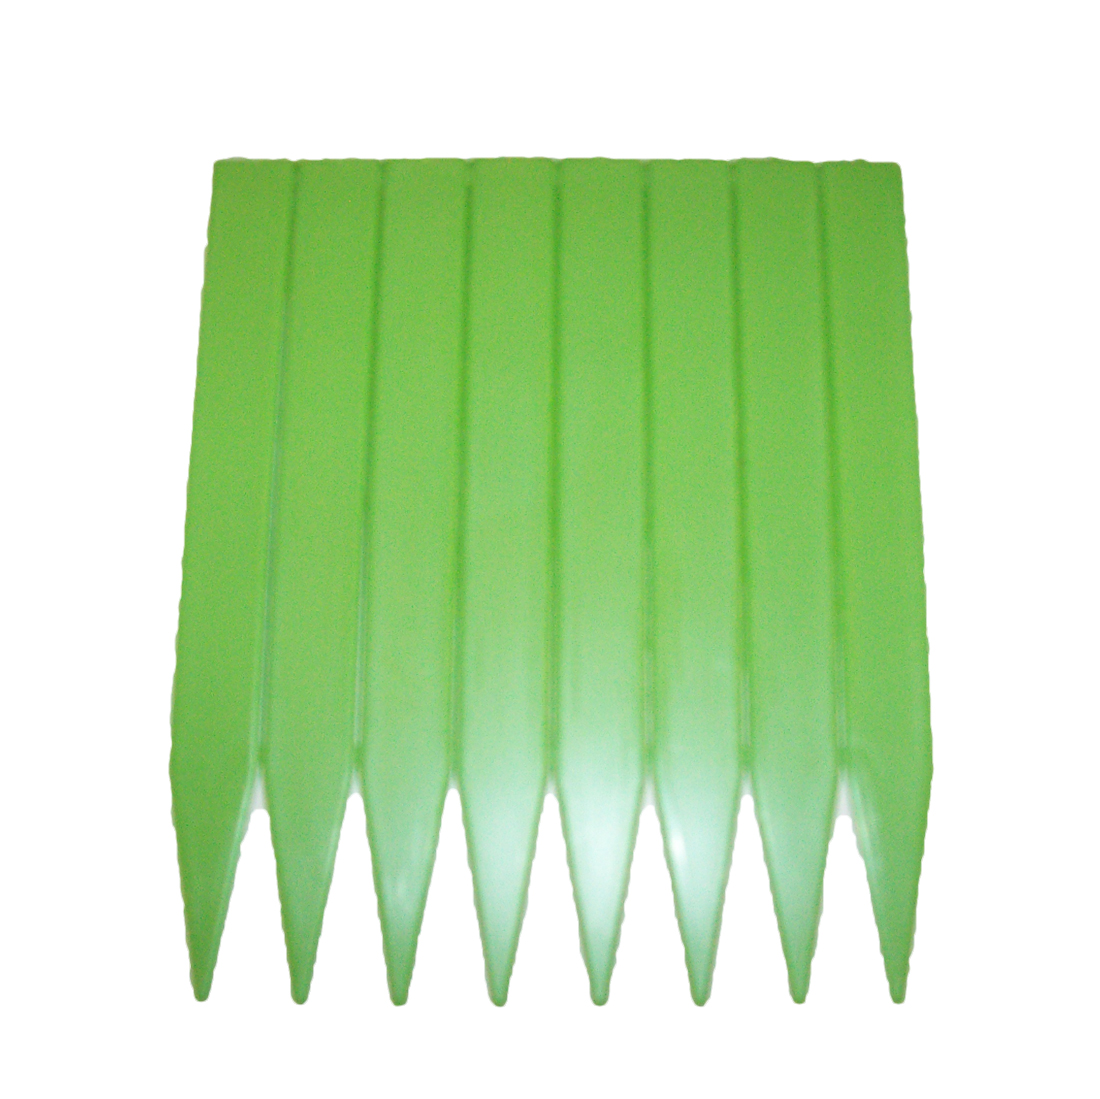 Plastic Label Inj Molded 6" x 5/8" Green - 1000 per box